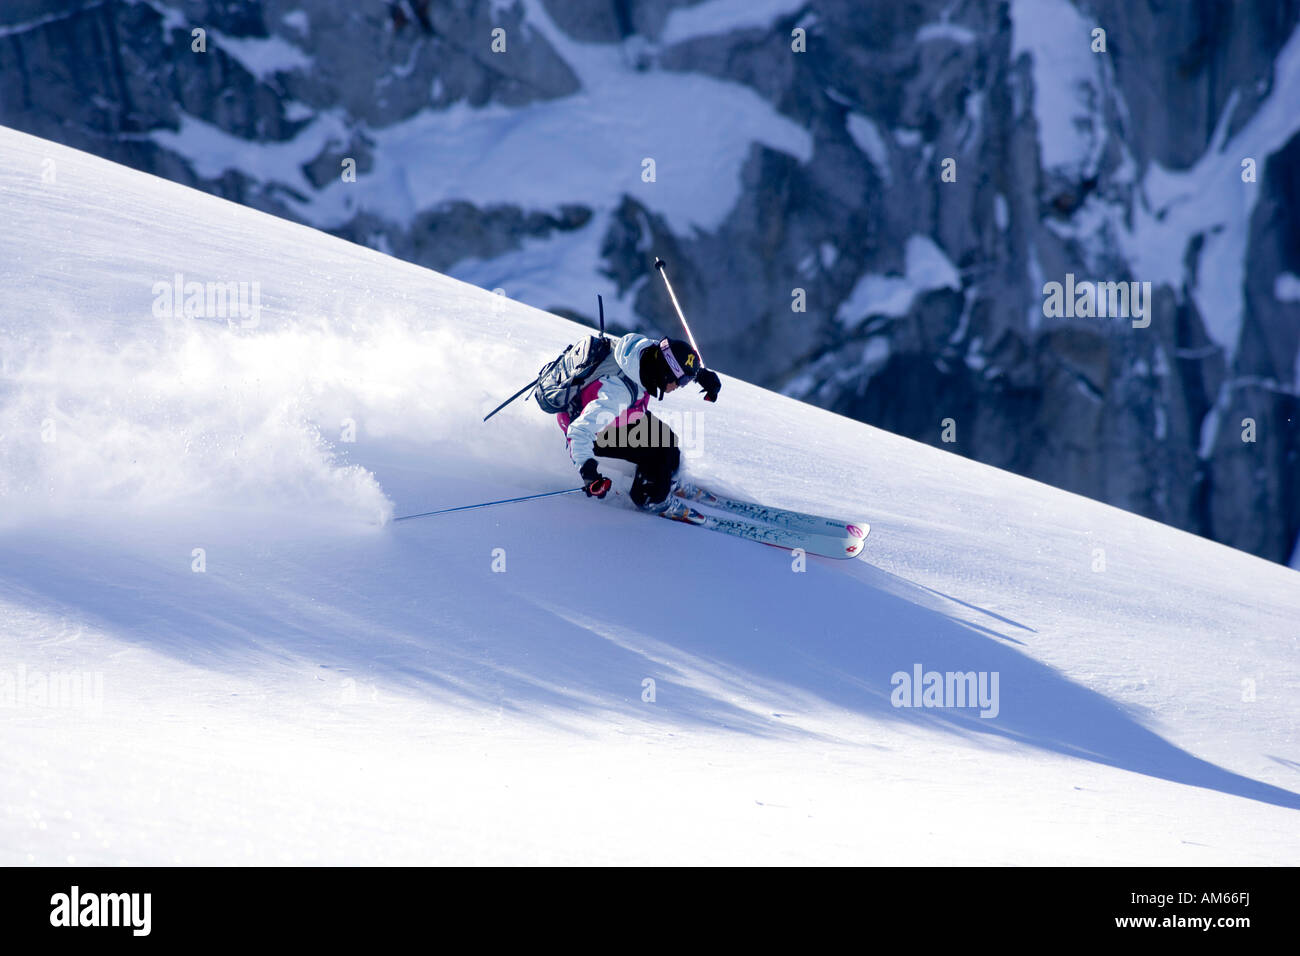 A freerider in deep snow, Weisssee, Austria Stock Photo